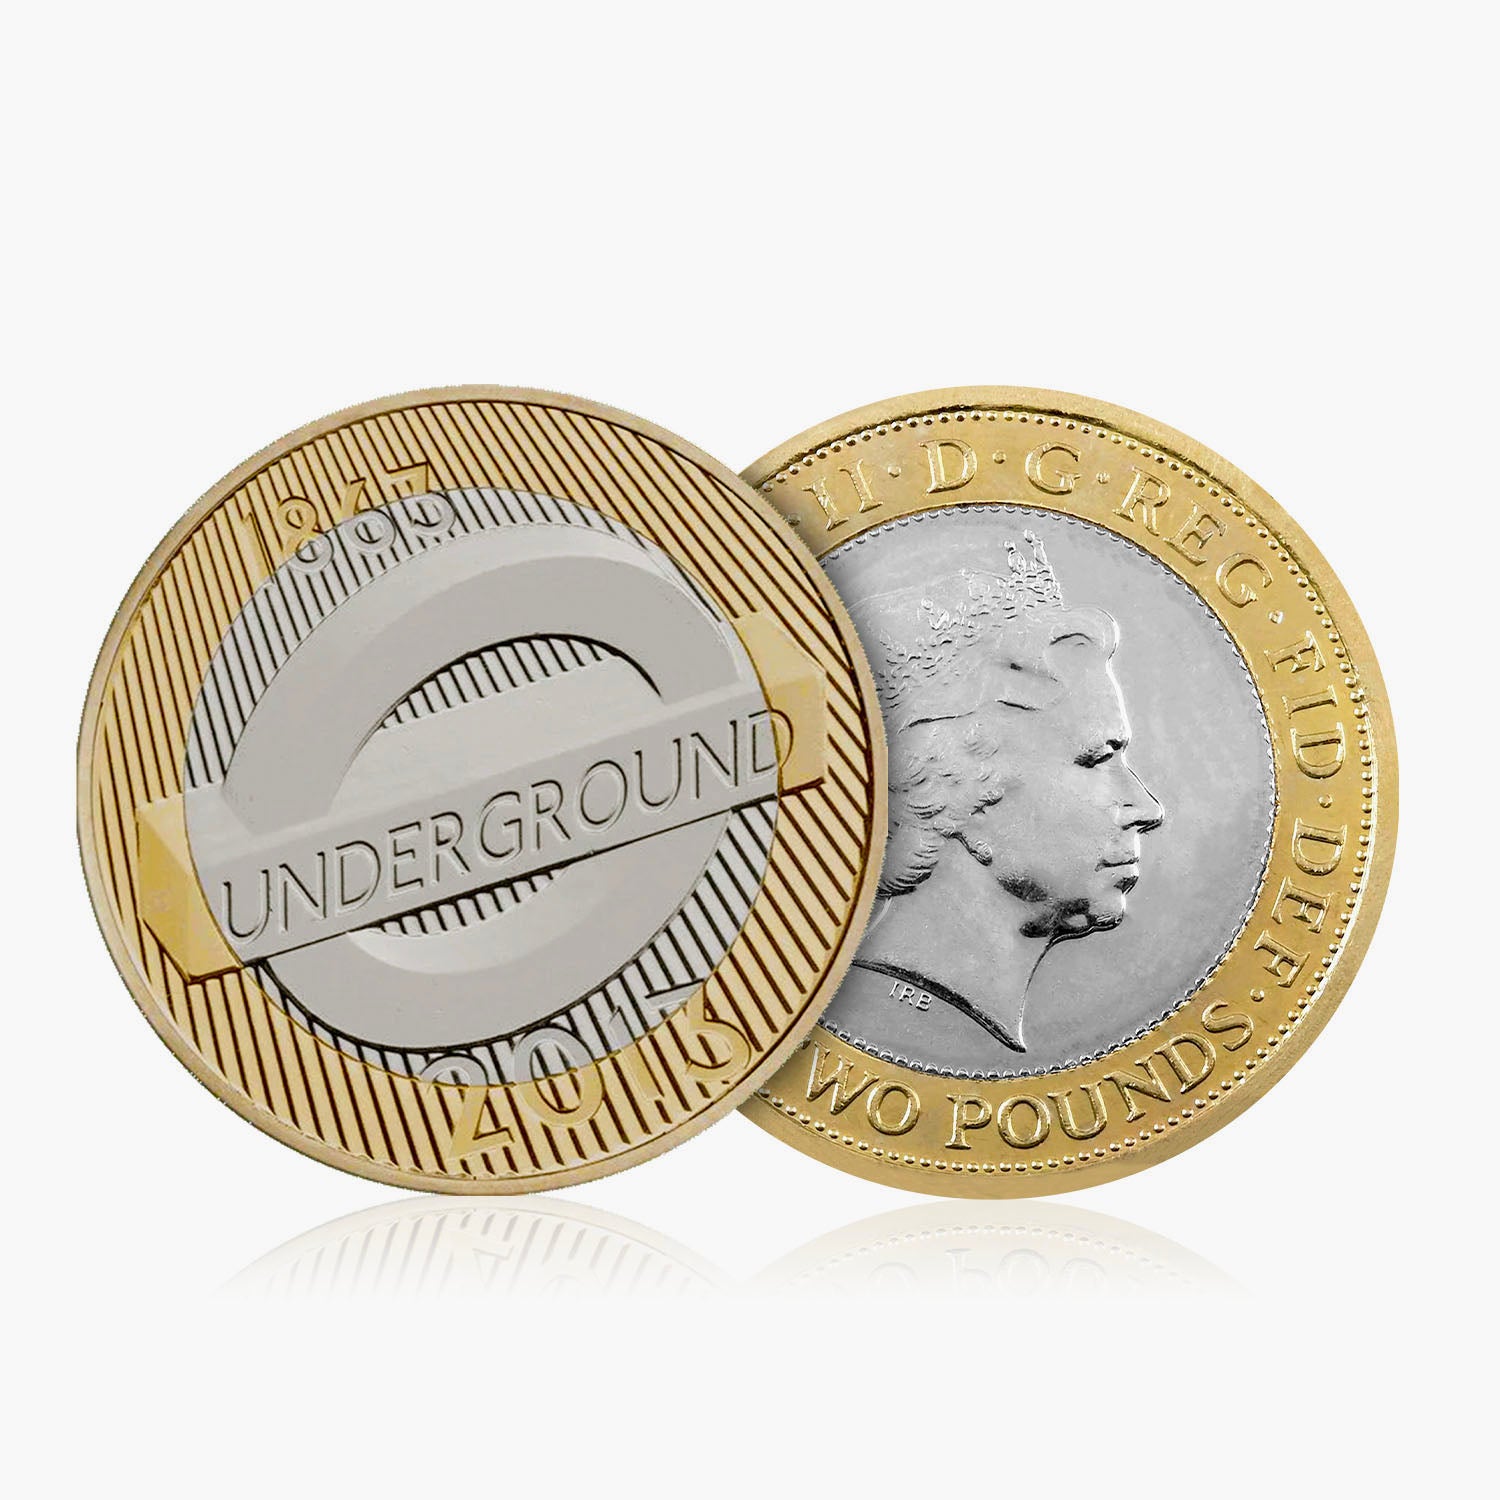 2013 Circulated London Underground Roundel UK £2 Coin